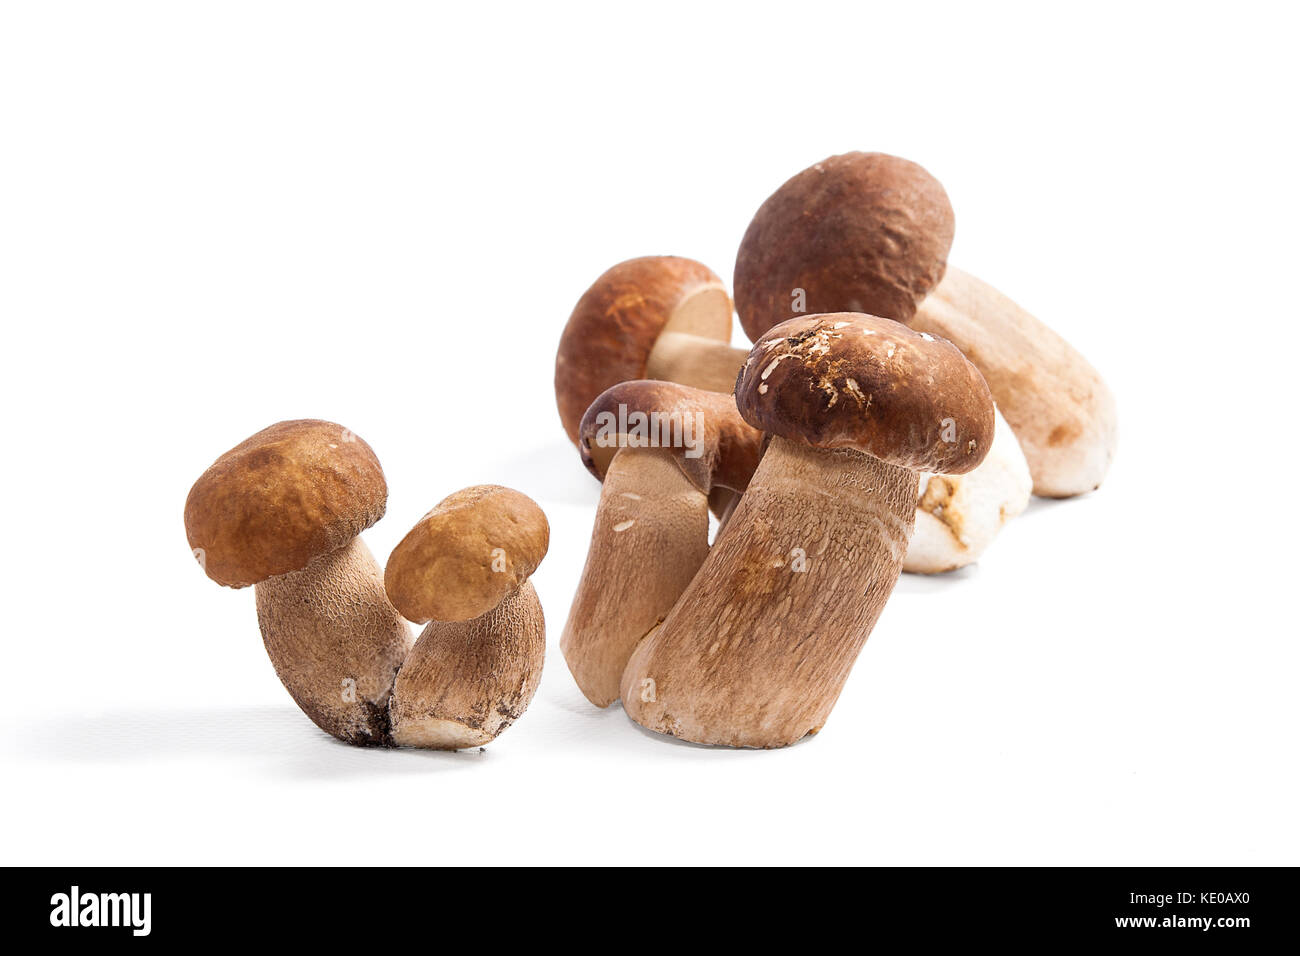 Harvested at autumn amazing edible mushrooms boletus edulis (king bolete) known as porcini mushrooms. Porcini mushrooms in front and several on back b Stock Photo